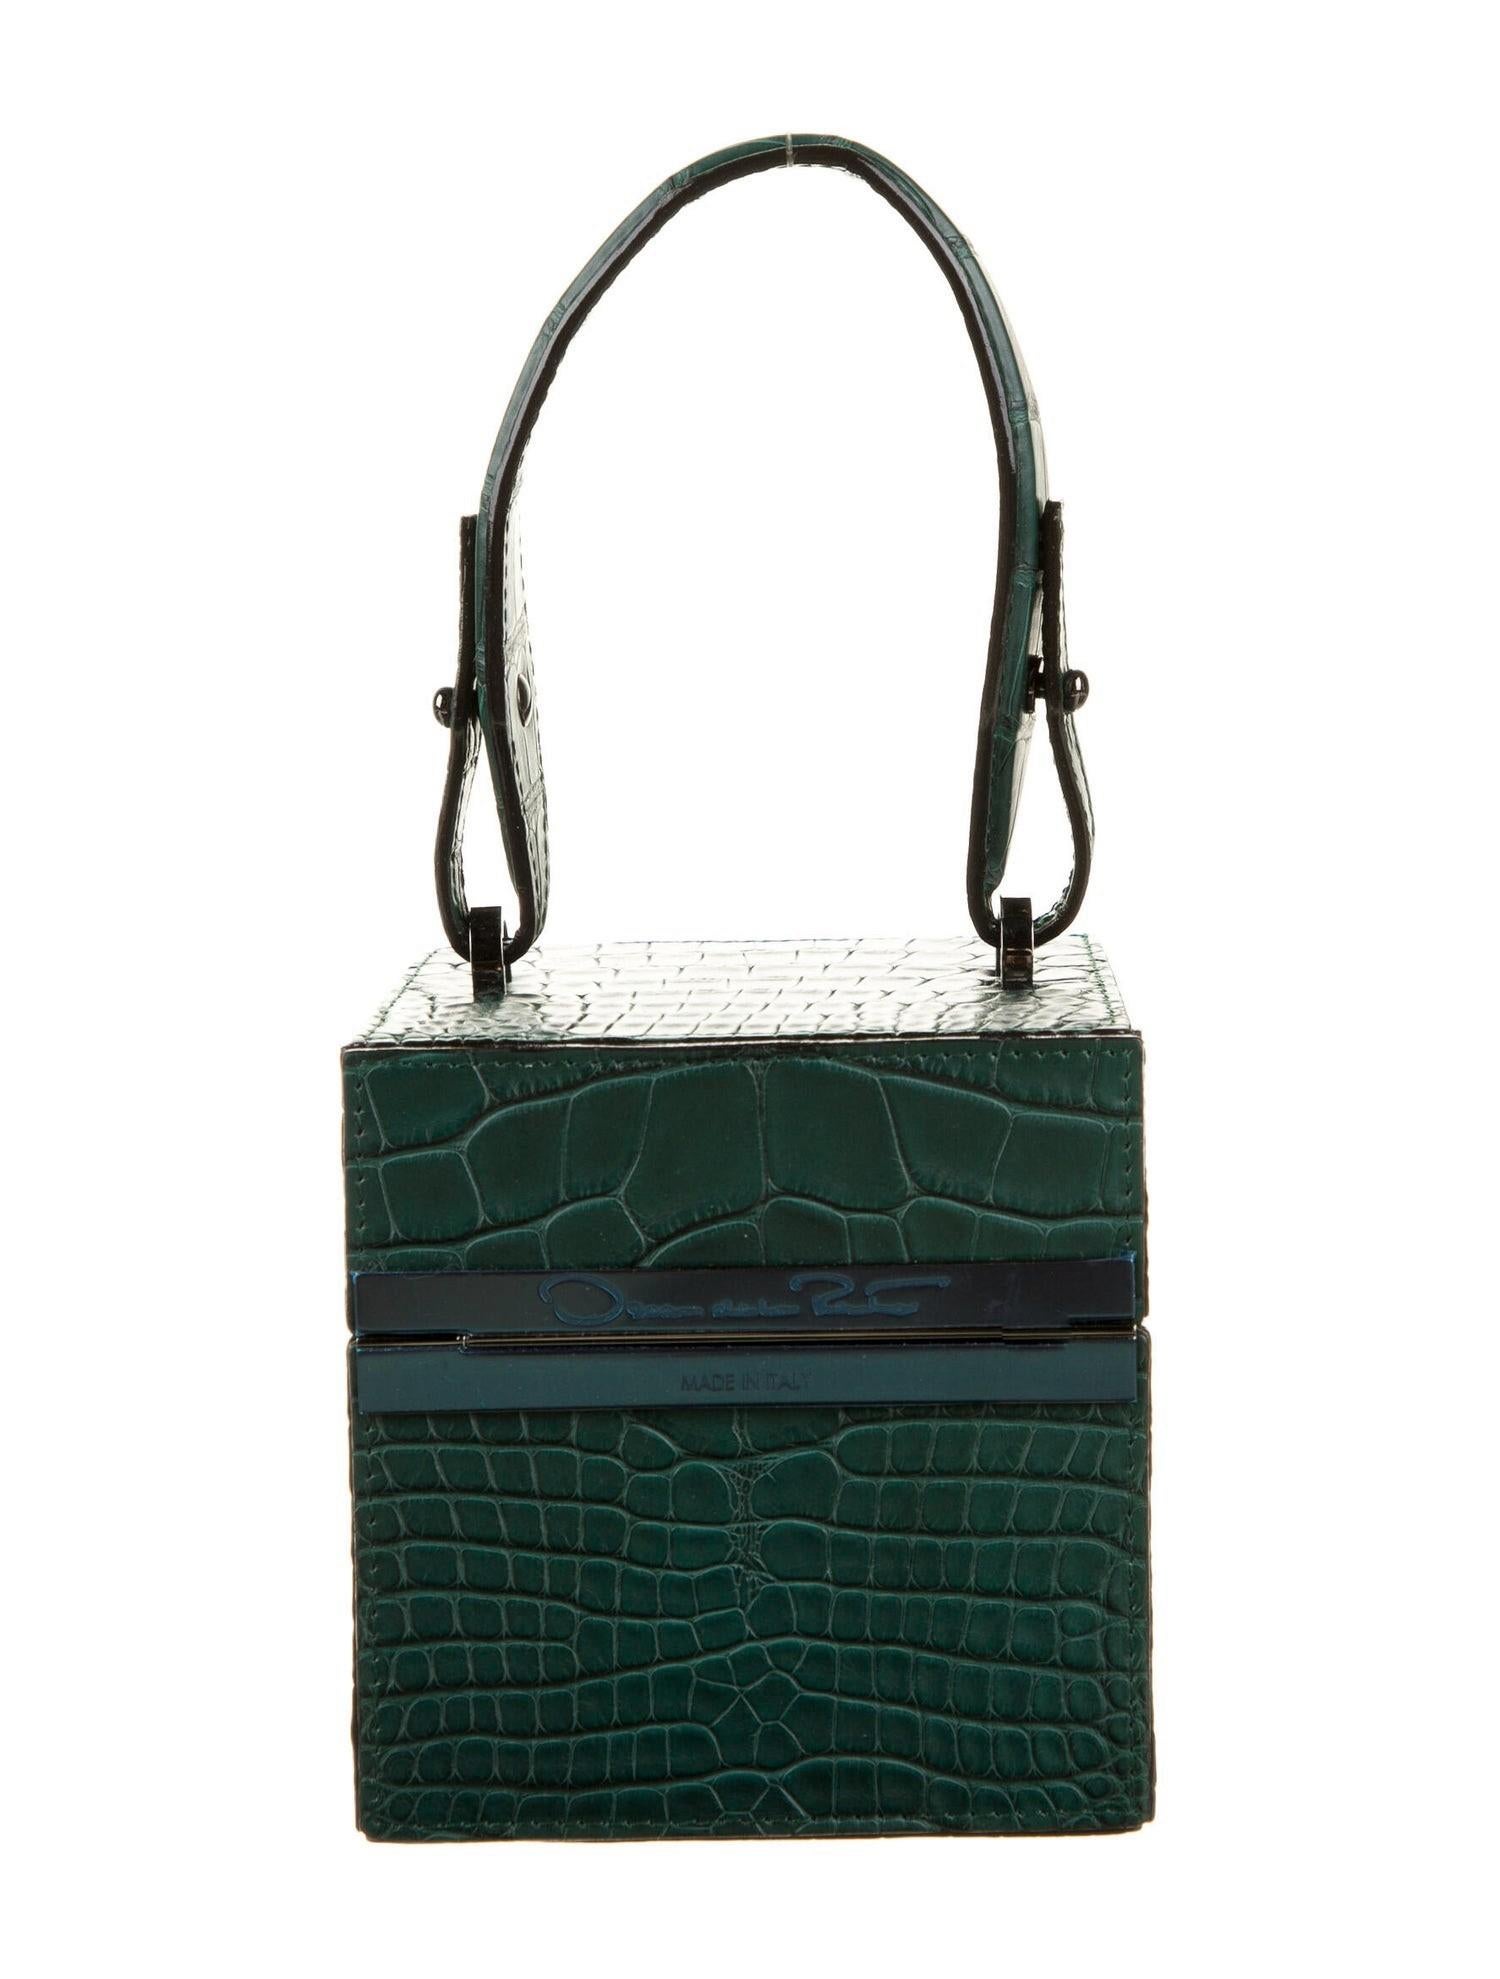 Neu $9690 Oscar De La Renta Alibi-Tasche aus grünem Alligator mit Box und Etiketten  3